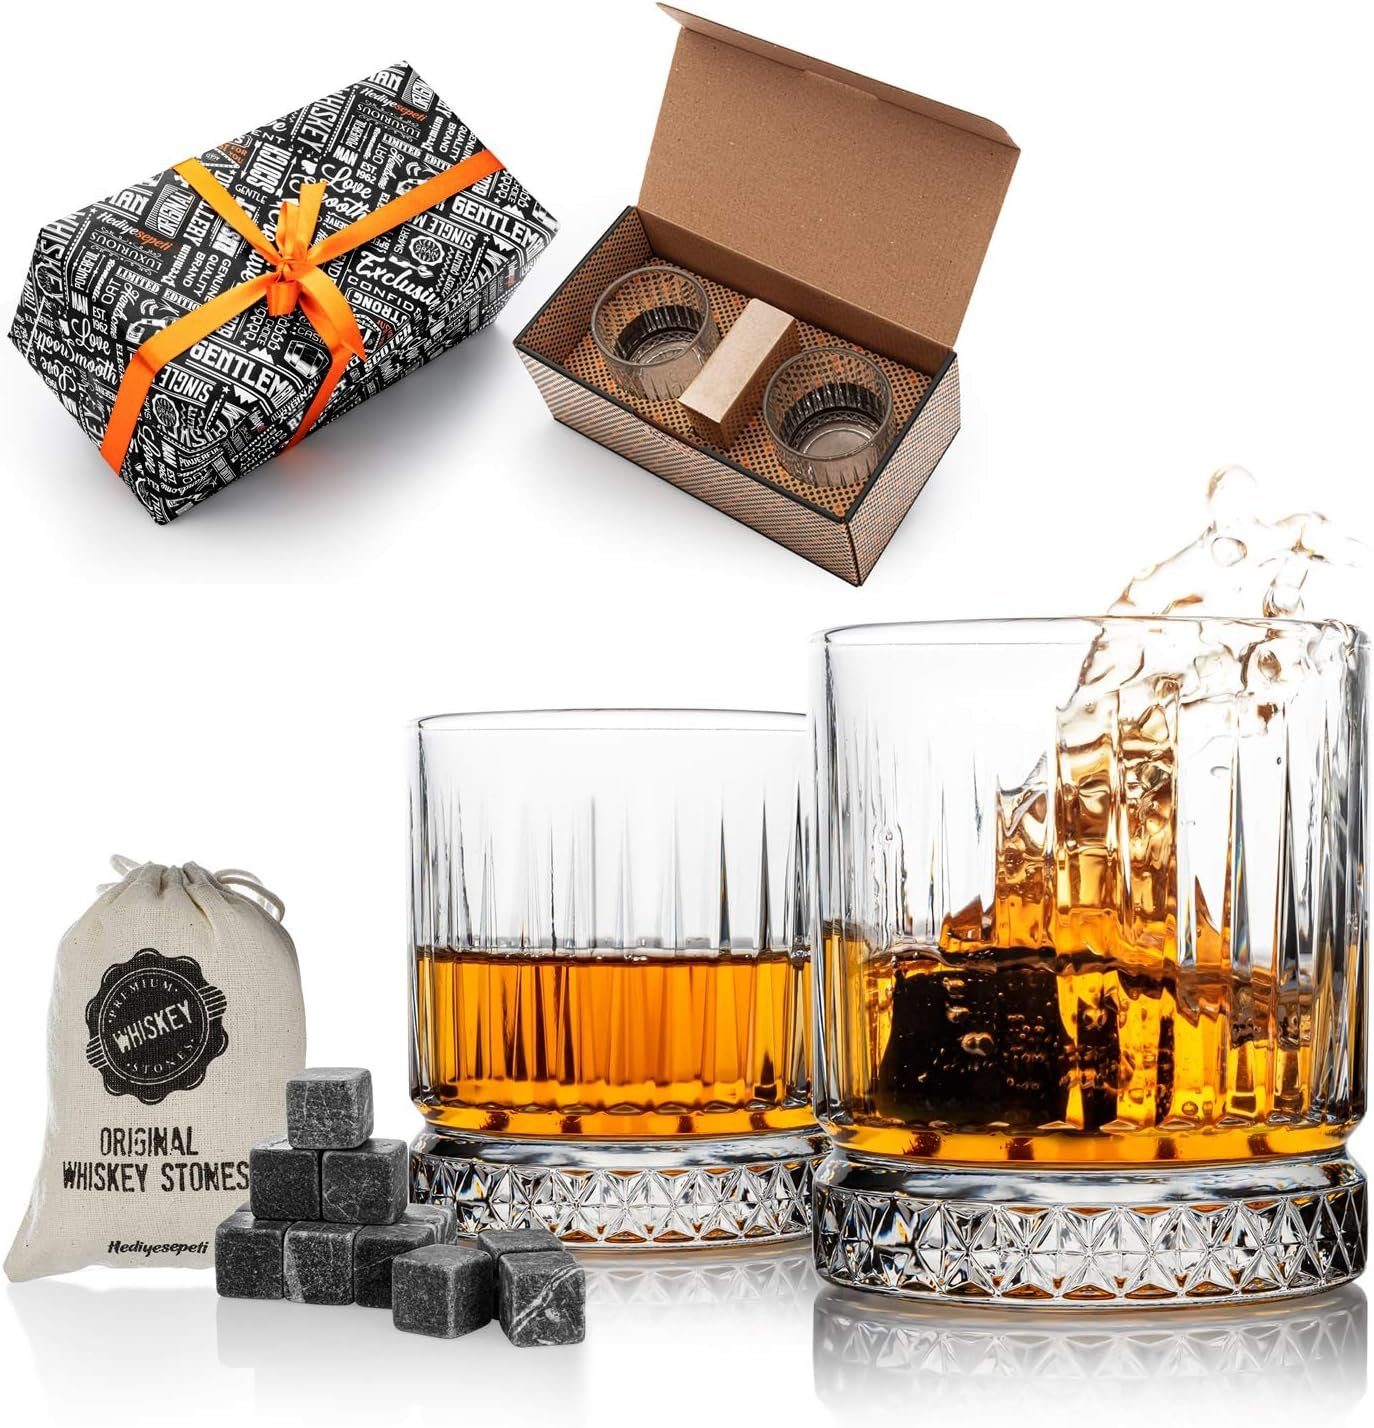 Hediyesepeti Cocktail-Set Whisky Stones Set (12-tlg) Marmor inklusive, mit und 12 2 Gläsern Eiswürfeln